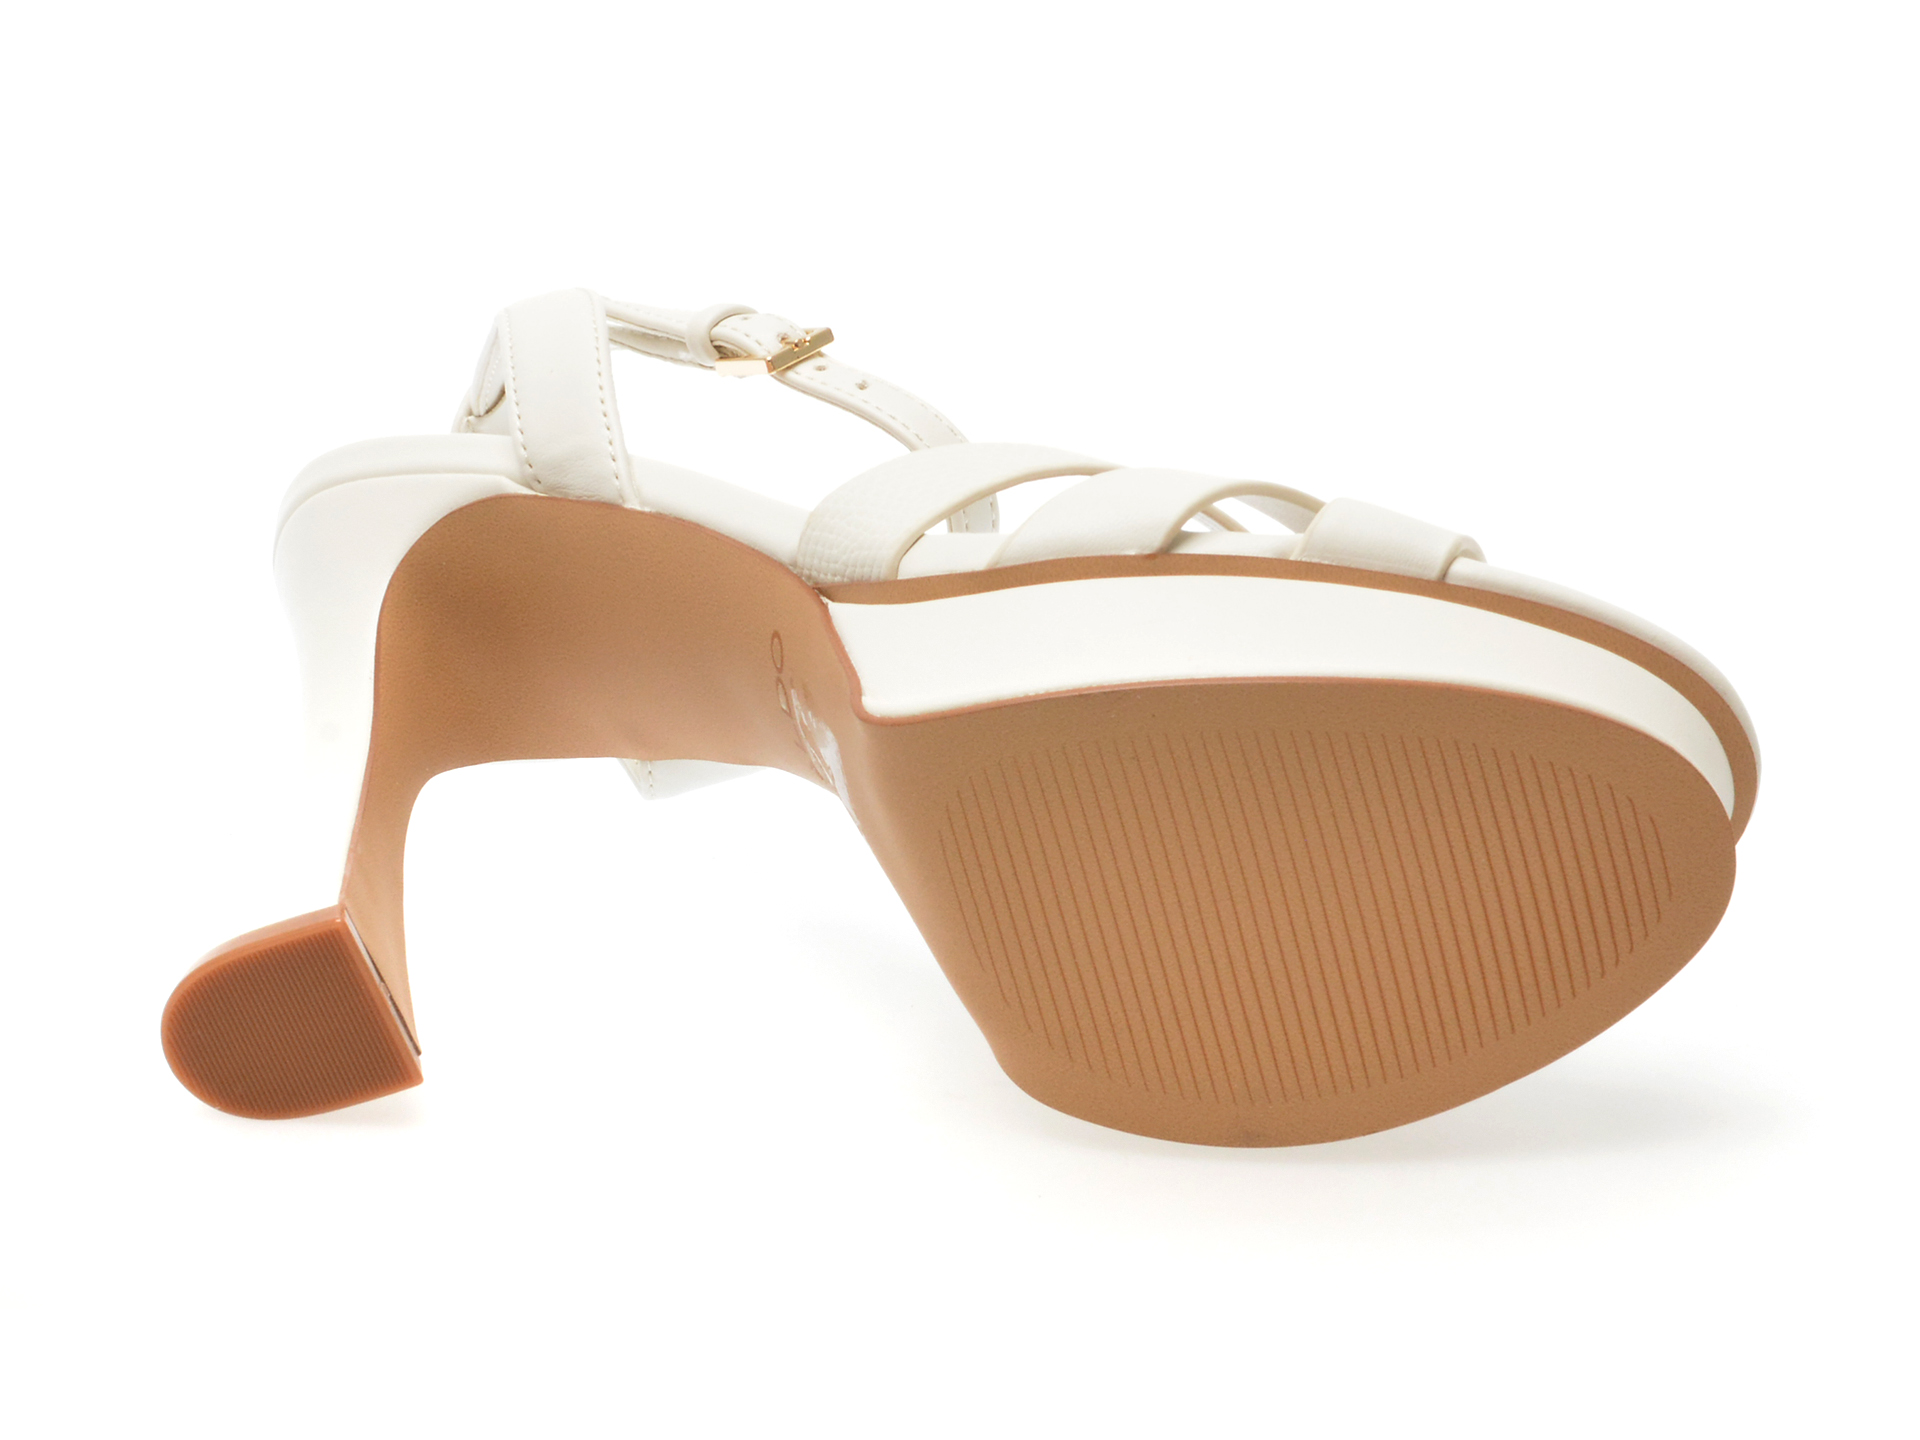 Sandale elegante ALDO albe, 13609128, din piele ecologica